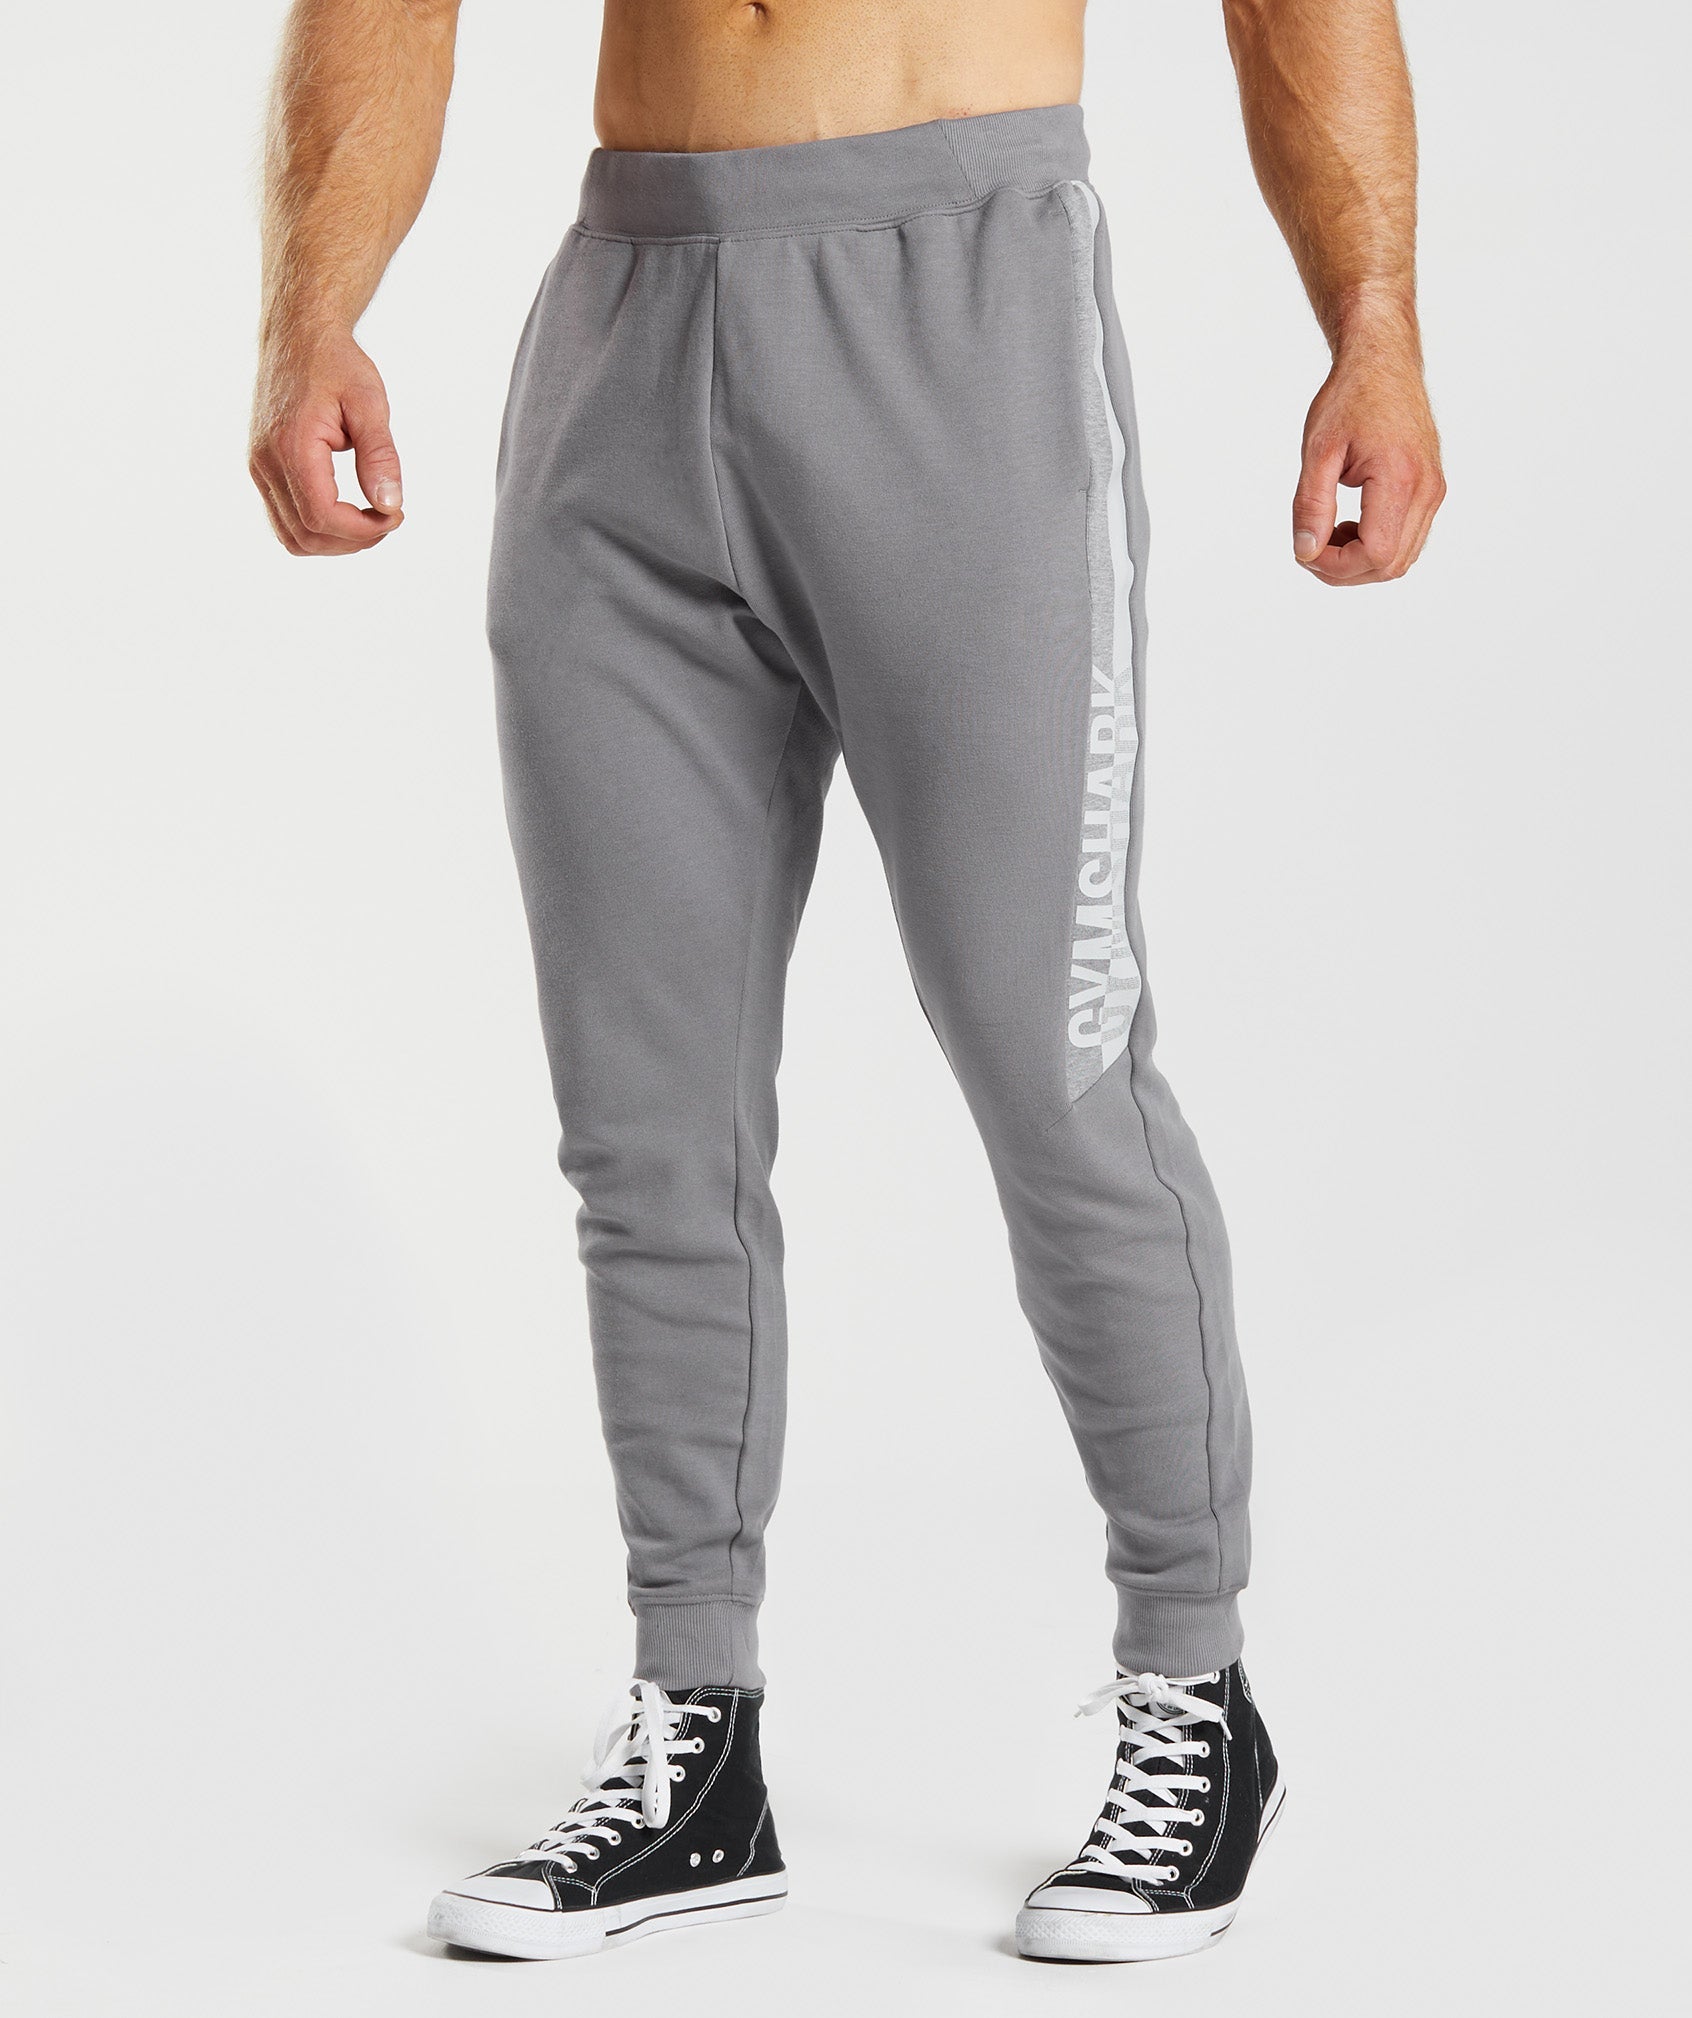 Gymshark Slim Track & Sweat Pants for Men